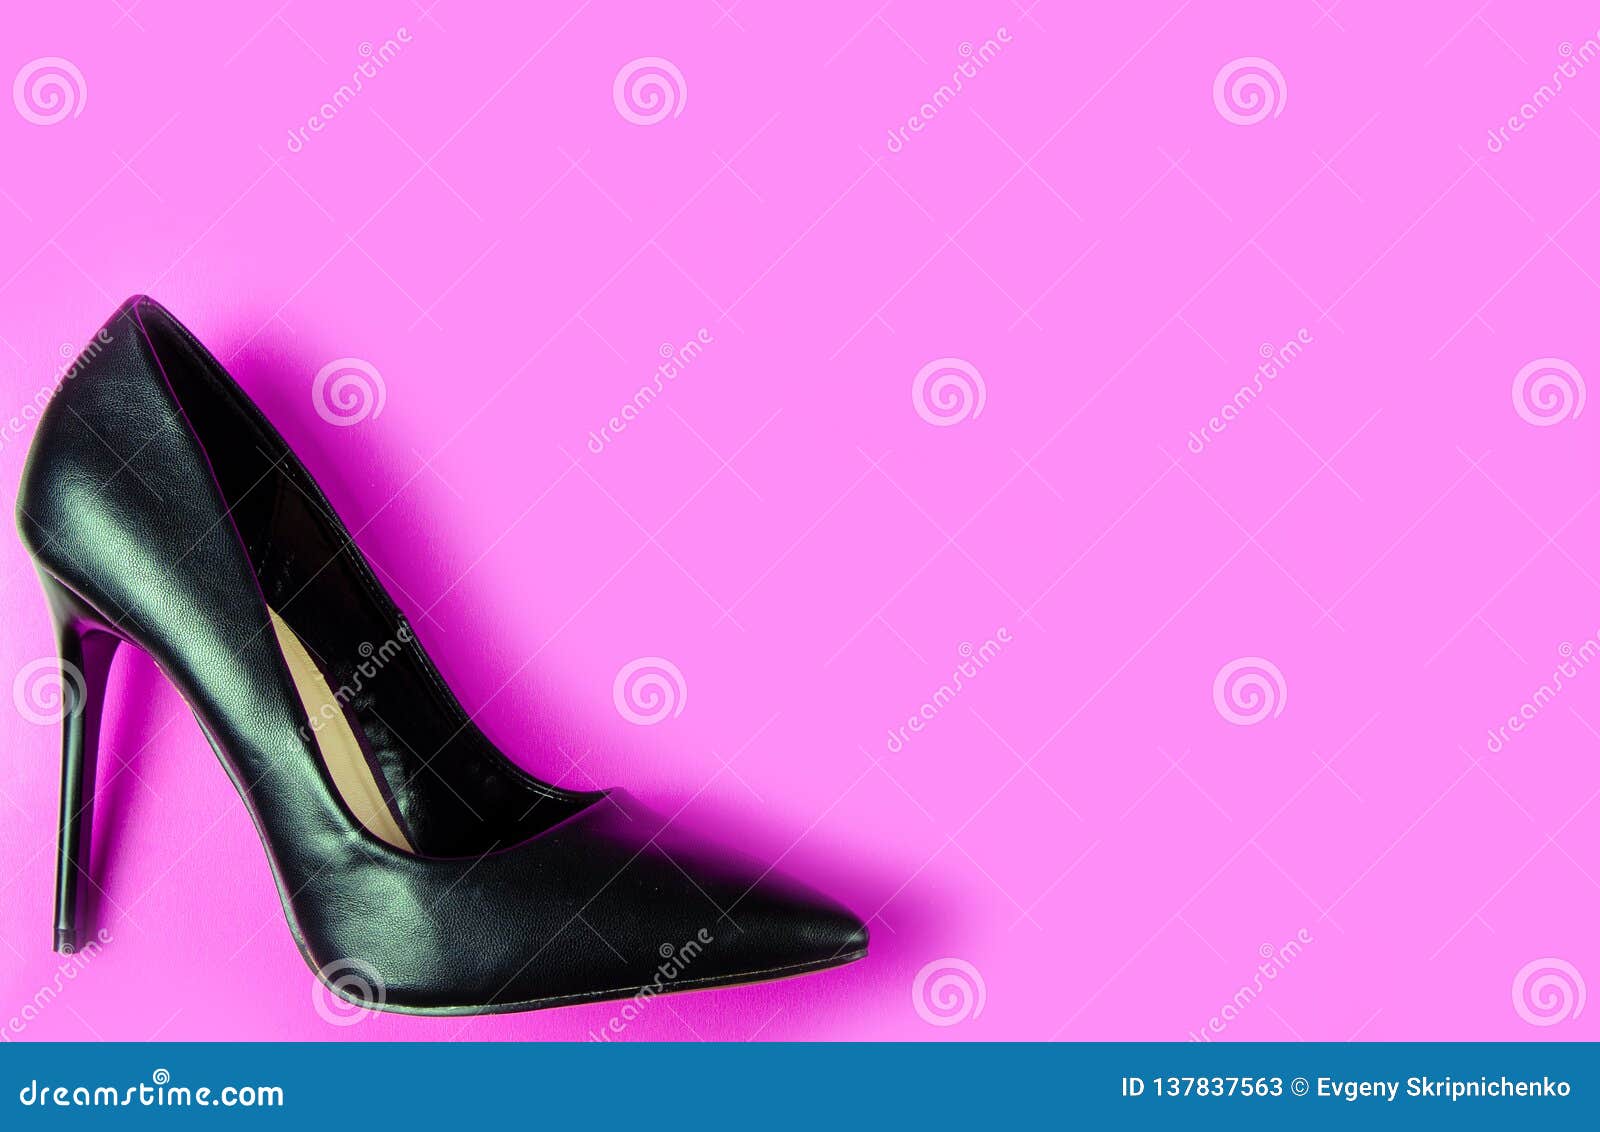 Black Female High Heel Shoes Stock Image - Image of pink, luxury: 137837563